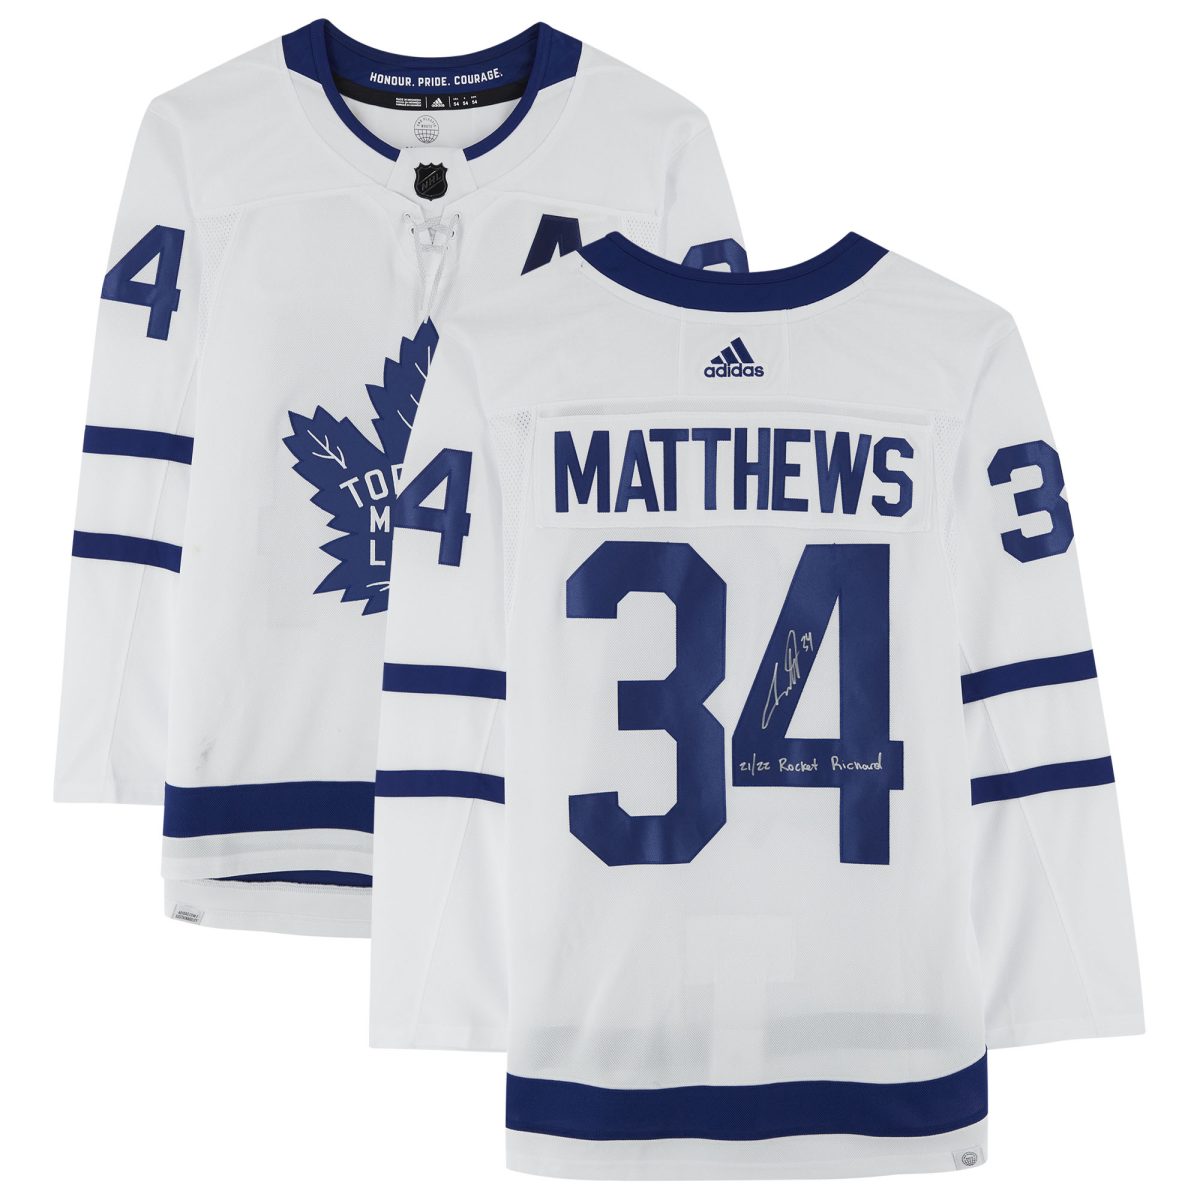 Auston Matthews White Toronto Maple Leafs Autographed adidas Authentic Jersey with "21/22 Rocket Richard" Inscription